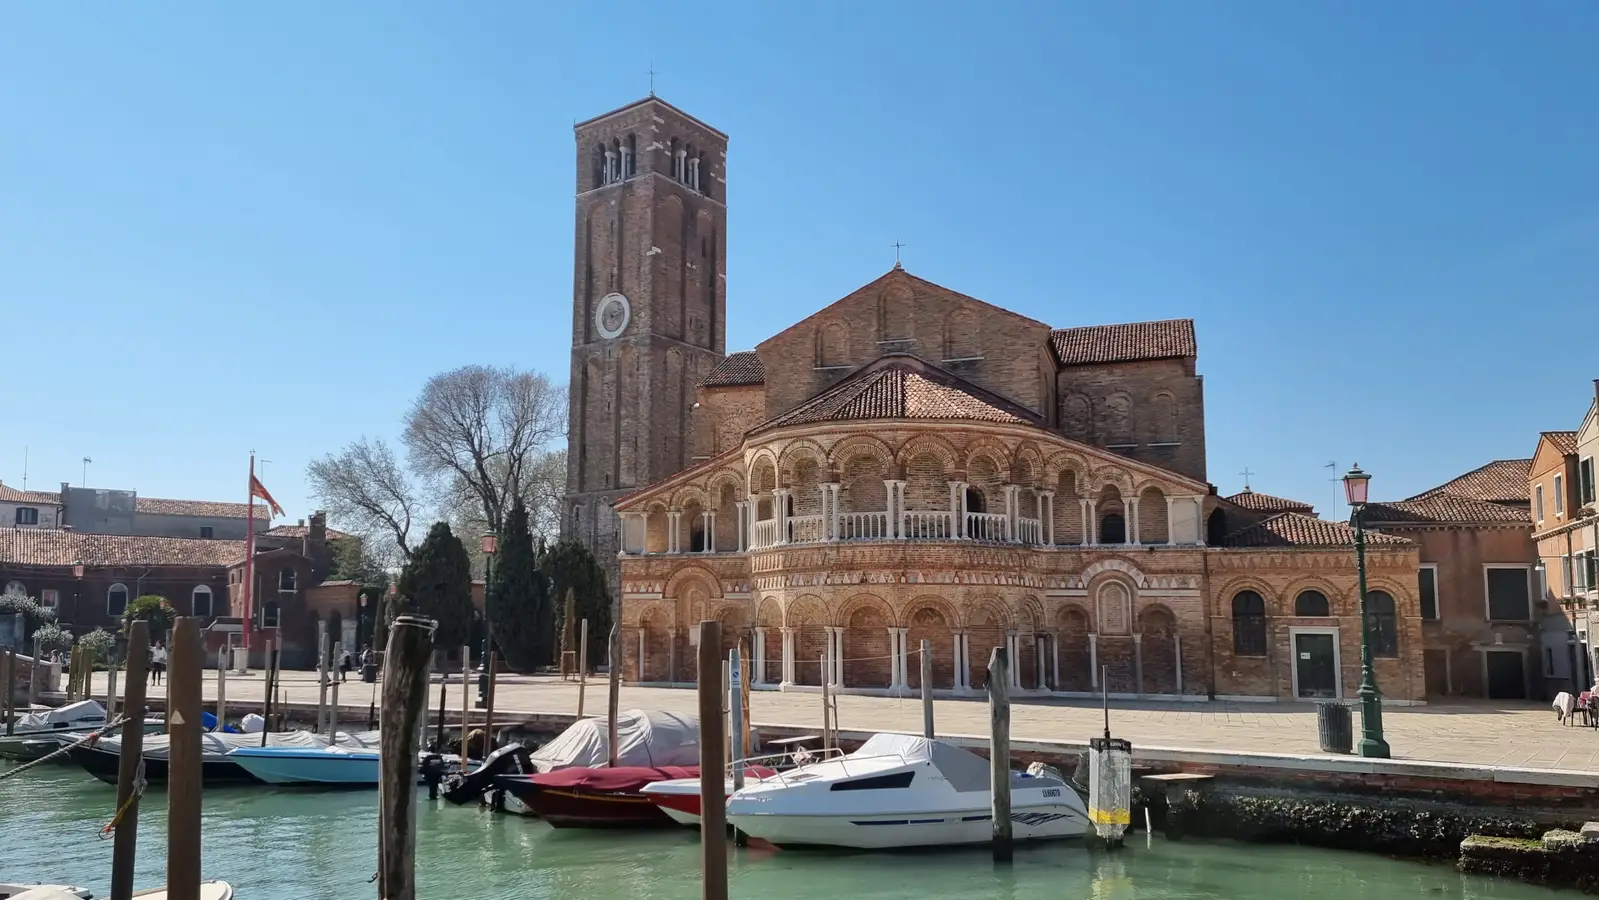 Kirche Santi Maria e Donato in Venedig, Insel Murano, Kirche mit Drachenknochen, geheimnisvolles Venedig, Sehenswürdigkeiten von Murano 